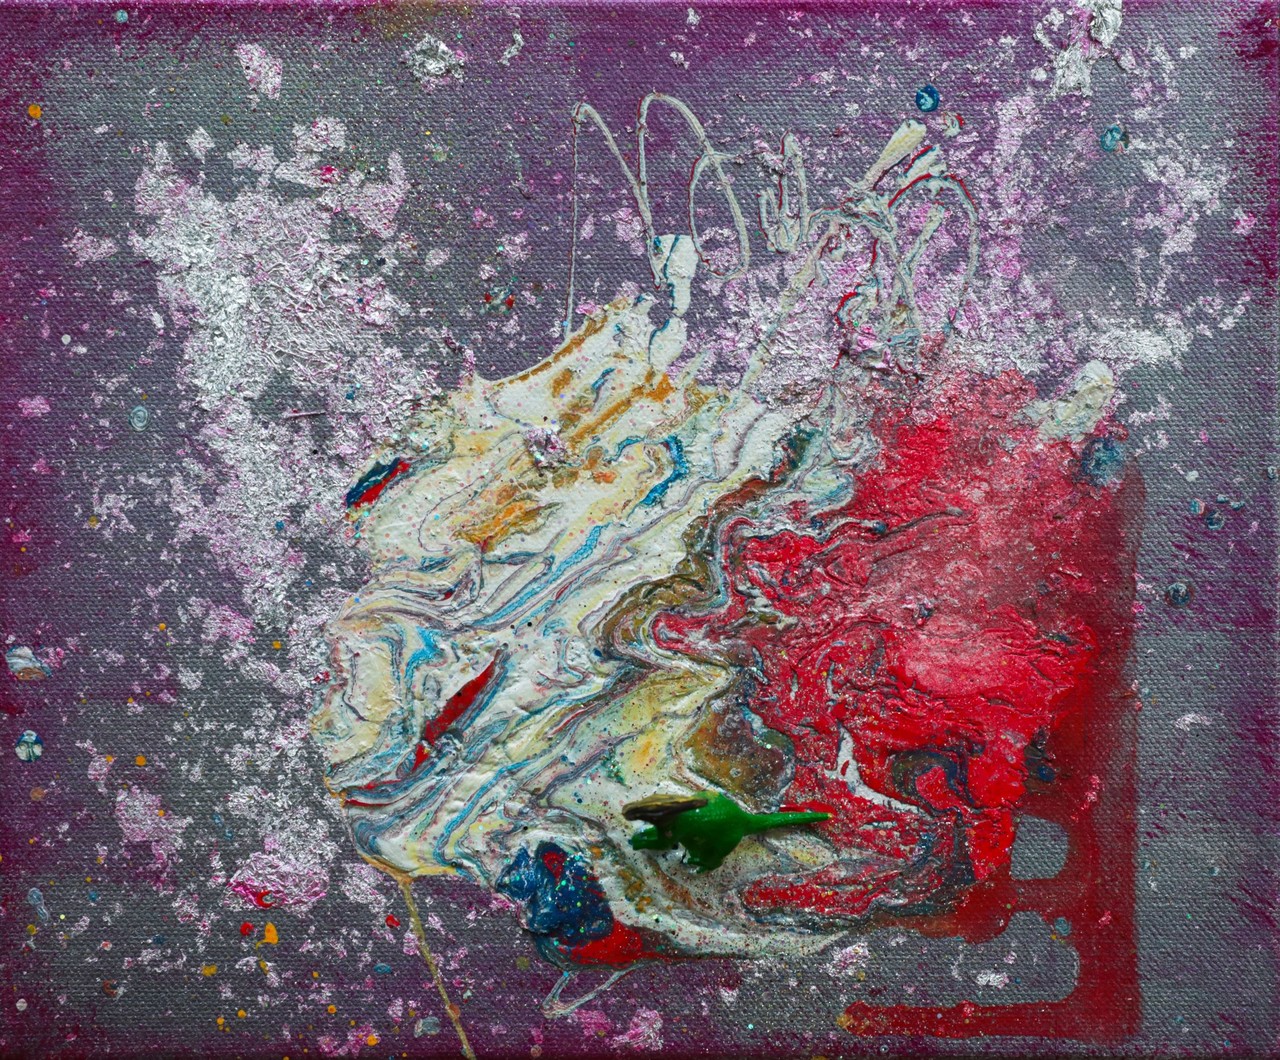 Aelita Andre, The Colliding Galaxy of the Cosmic Bridge, 2017, Mixed media, 25.4 x 30.5 cm, AA 007